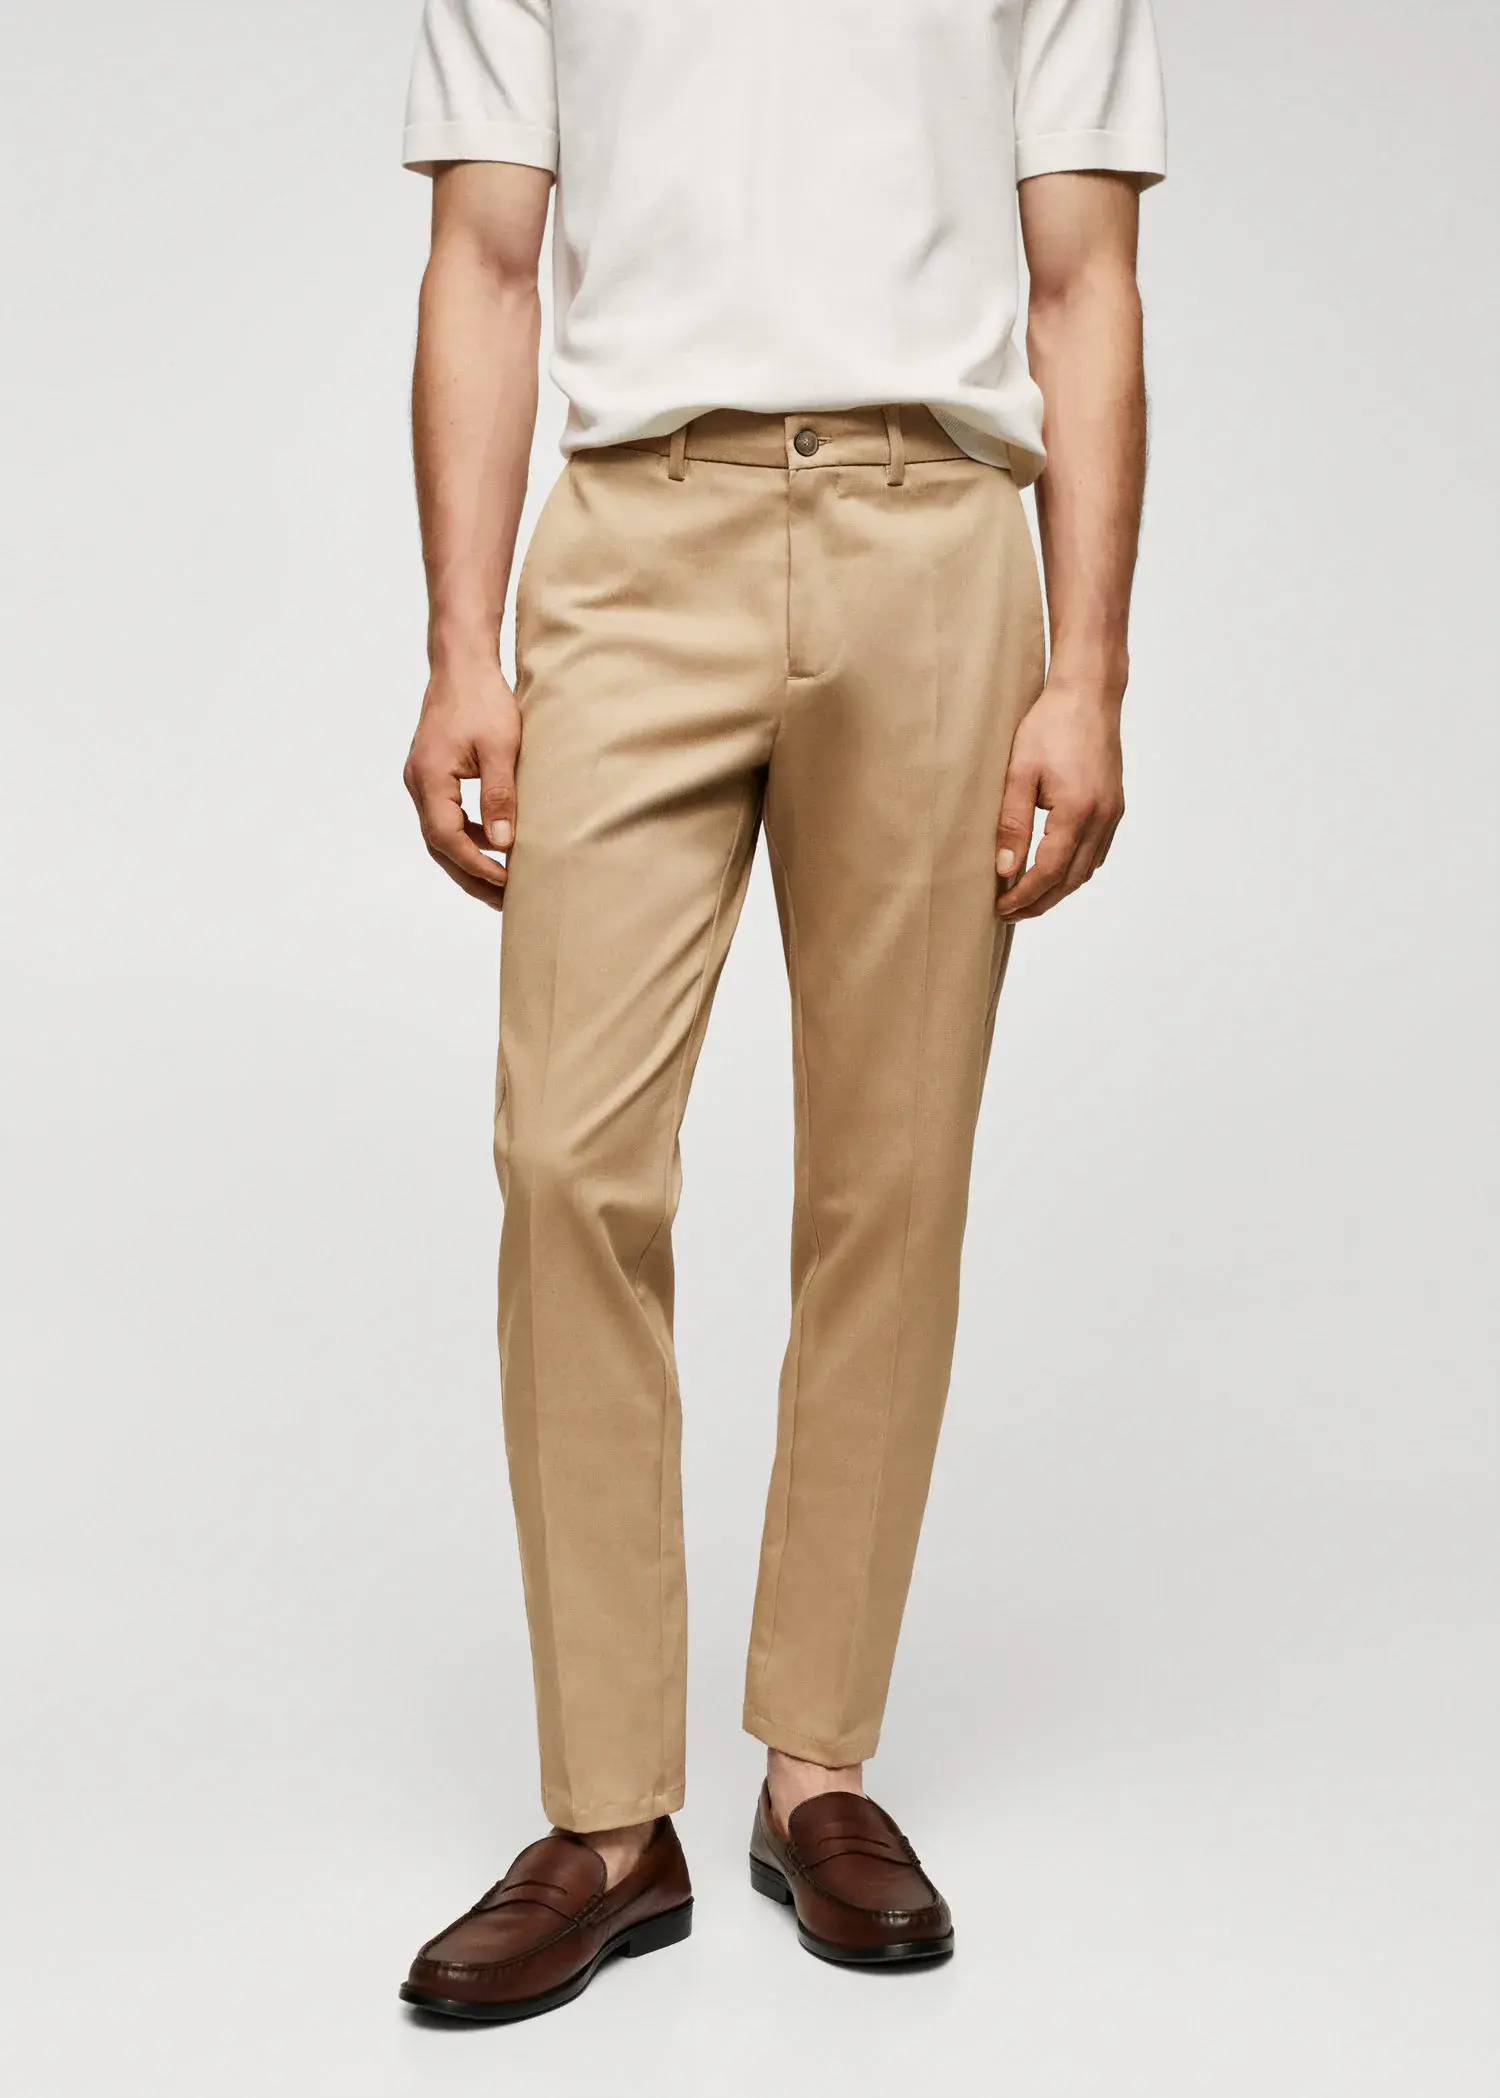 Mango Slim fit chino trousers. a man wearing a white shirt and tan pants. 